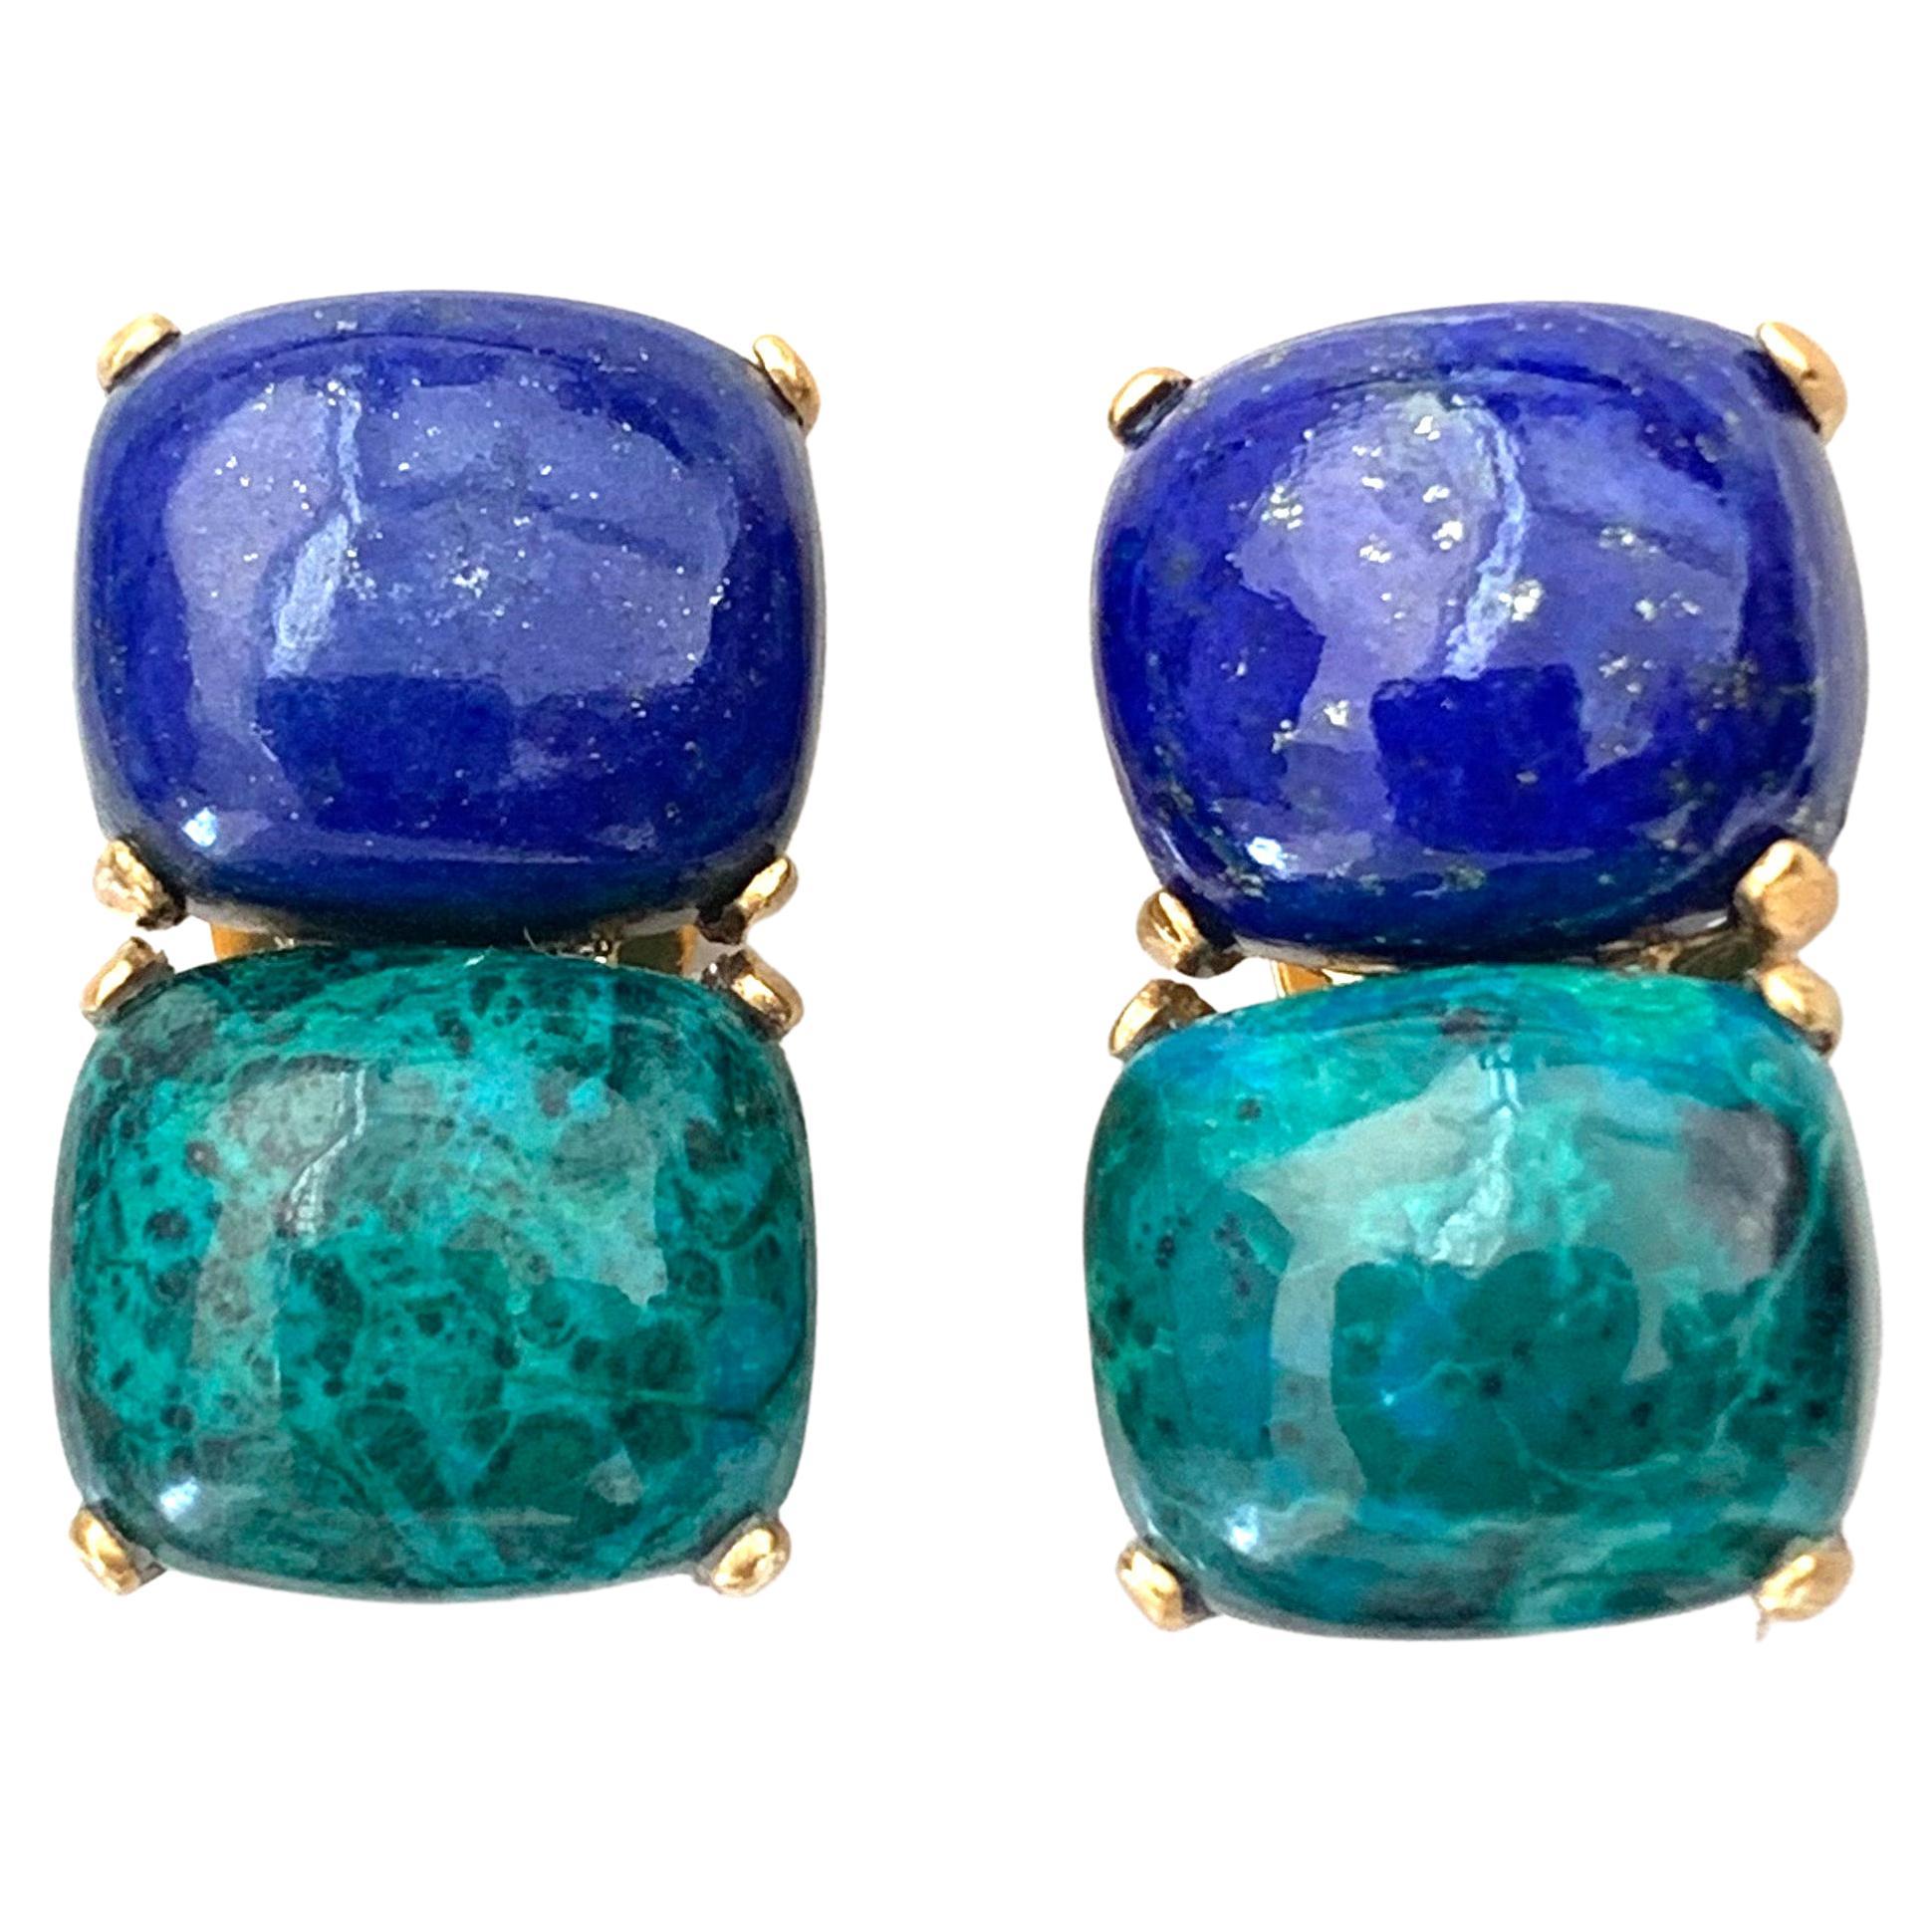 Center drill Lapis Lazuli Earrings Vintage Carved Lapis Lazuli Round Earrings Pair 14mm 8g-C495